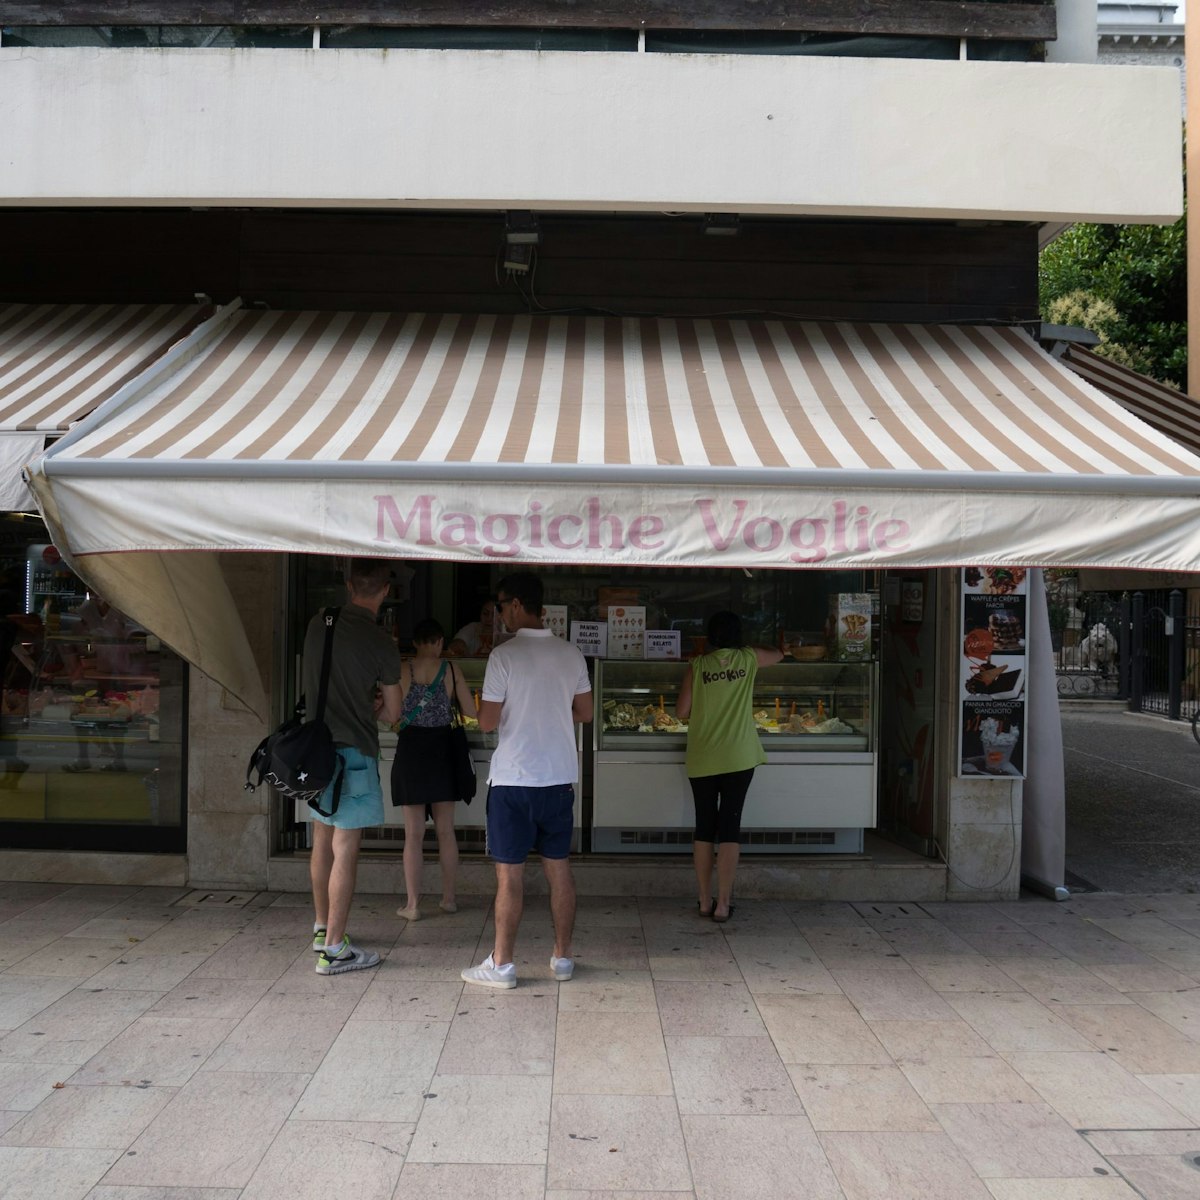 The canopied shop front of the Magiche Voglie ice-cream parlour